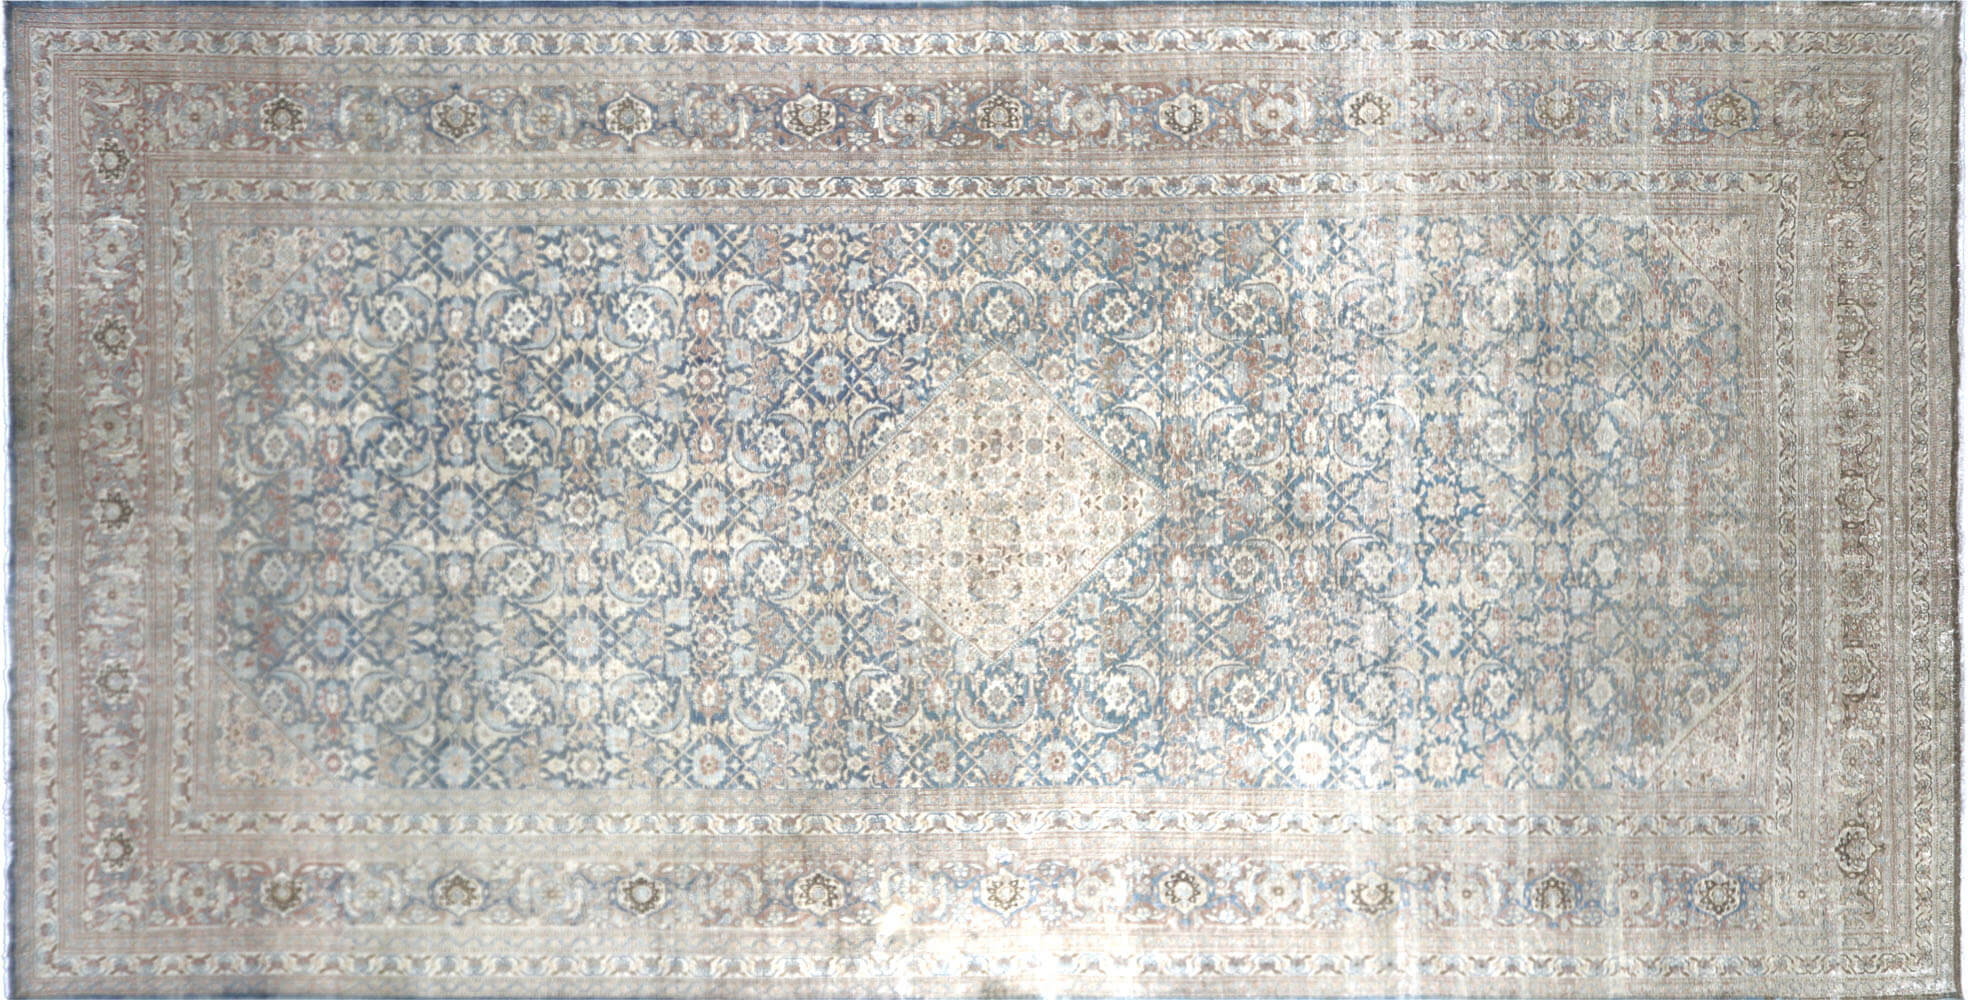 Semi Antique Persian Tabriz Rug - 12' x 23'3"